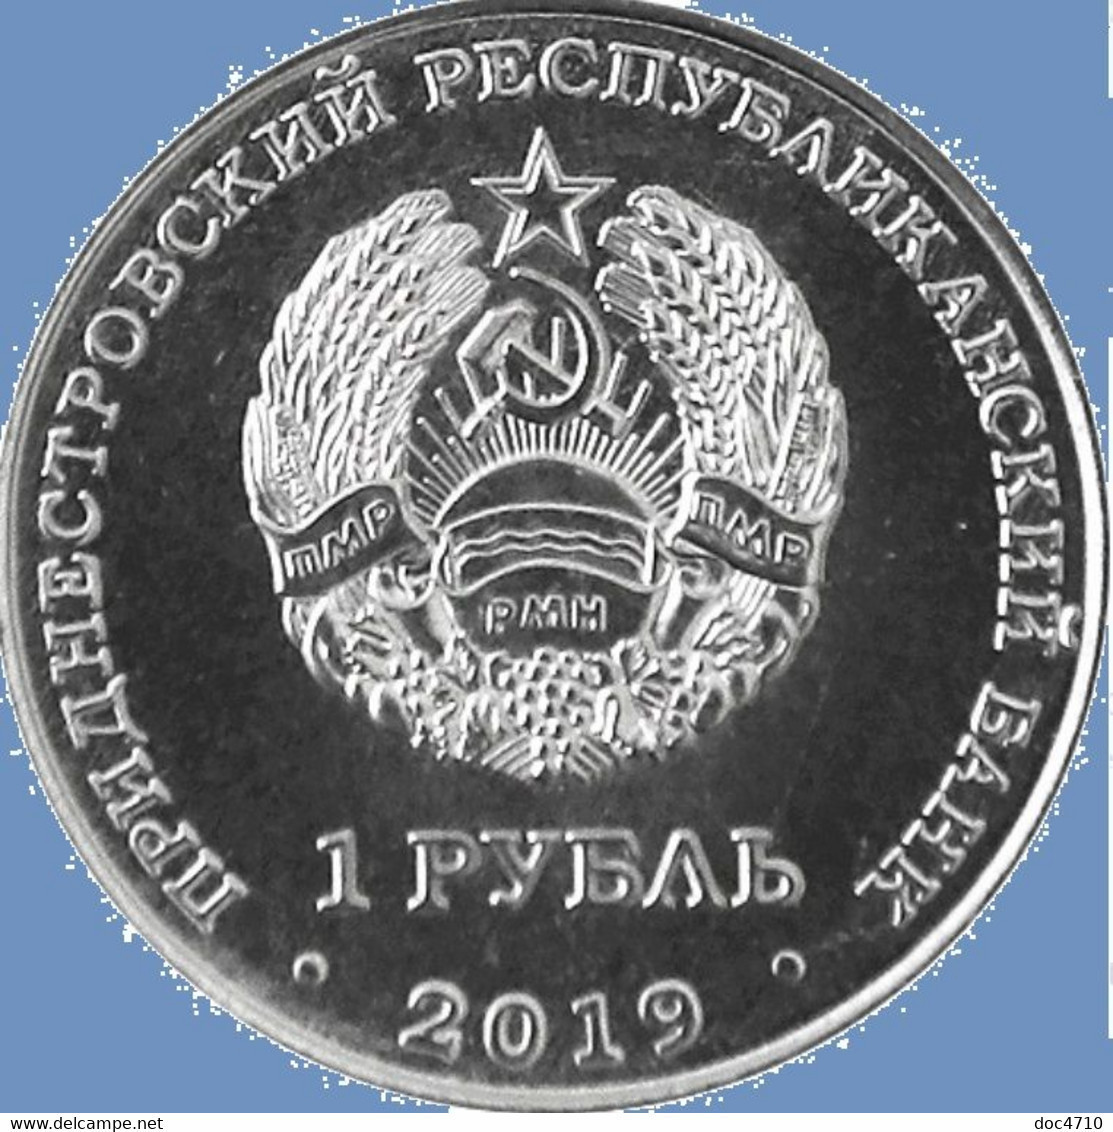 Moldova-Transnistria 1 Ruble 2019, Chinese Zodiac Series - Year Of The Metal Rat 2020, KM#New, Unc - Moldova